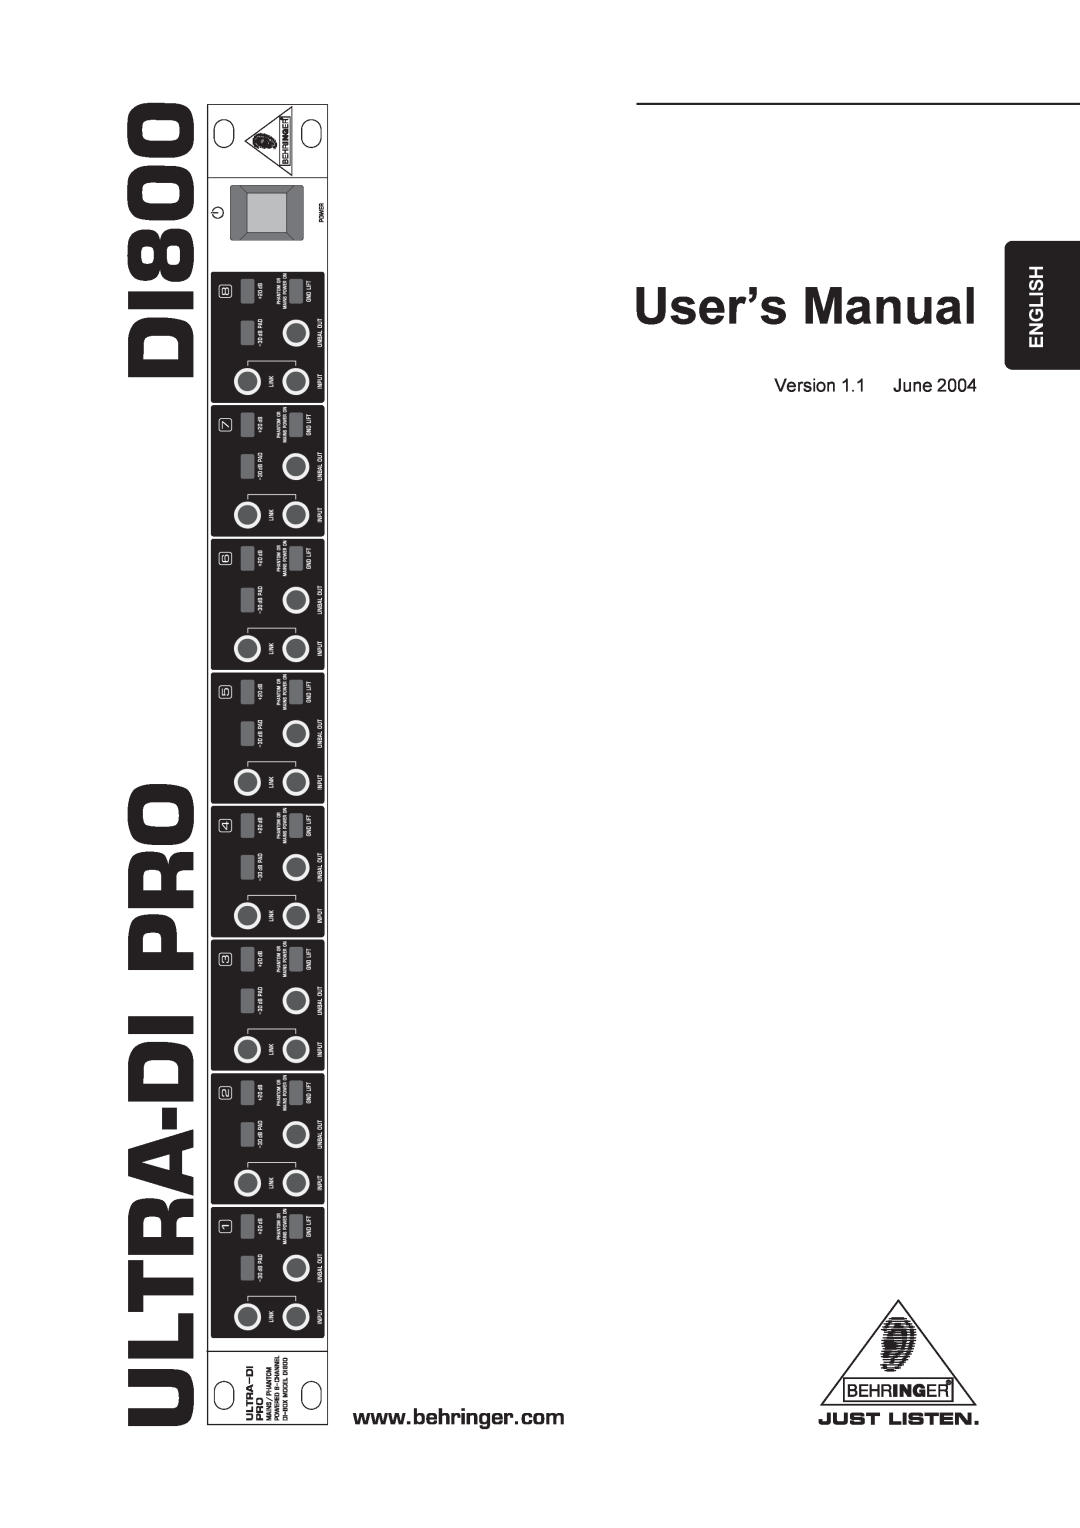 Behringer manual English, ULTRA-DIPRO DI800 